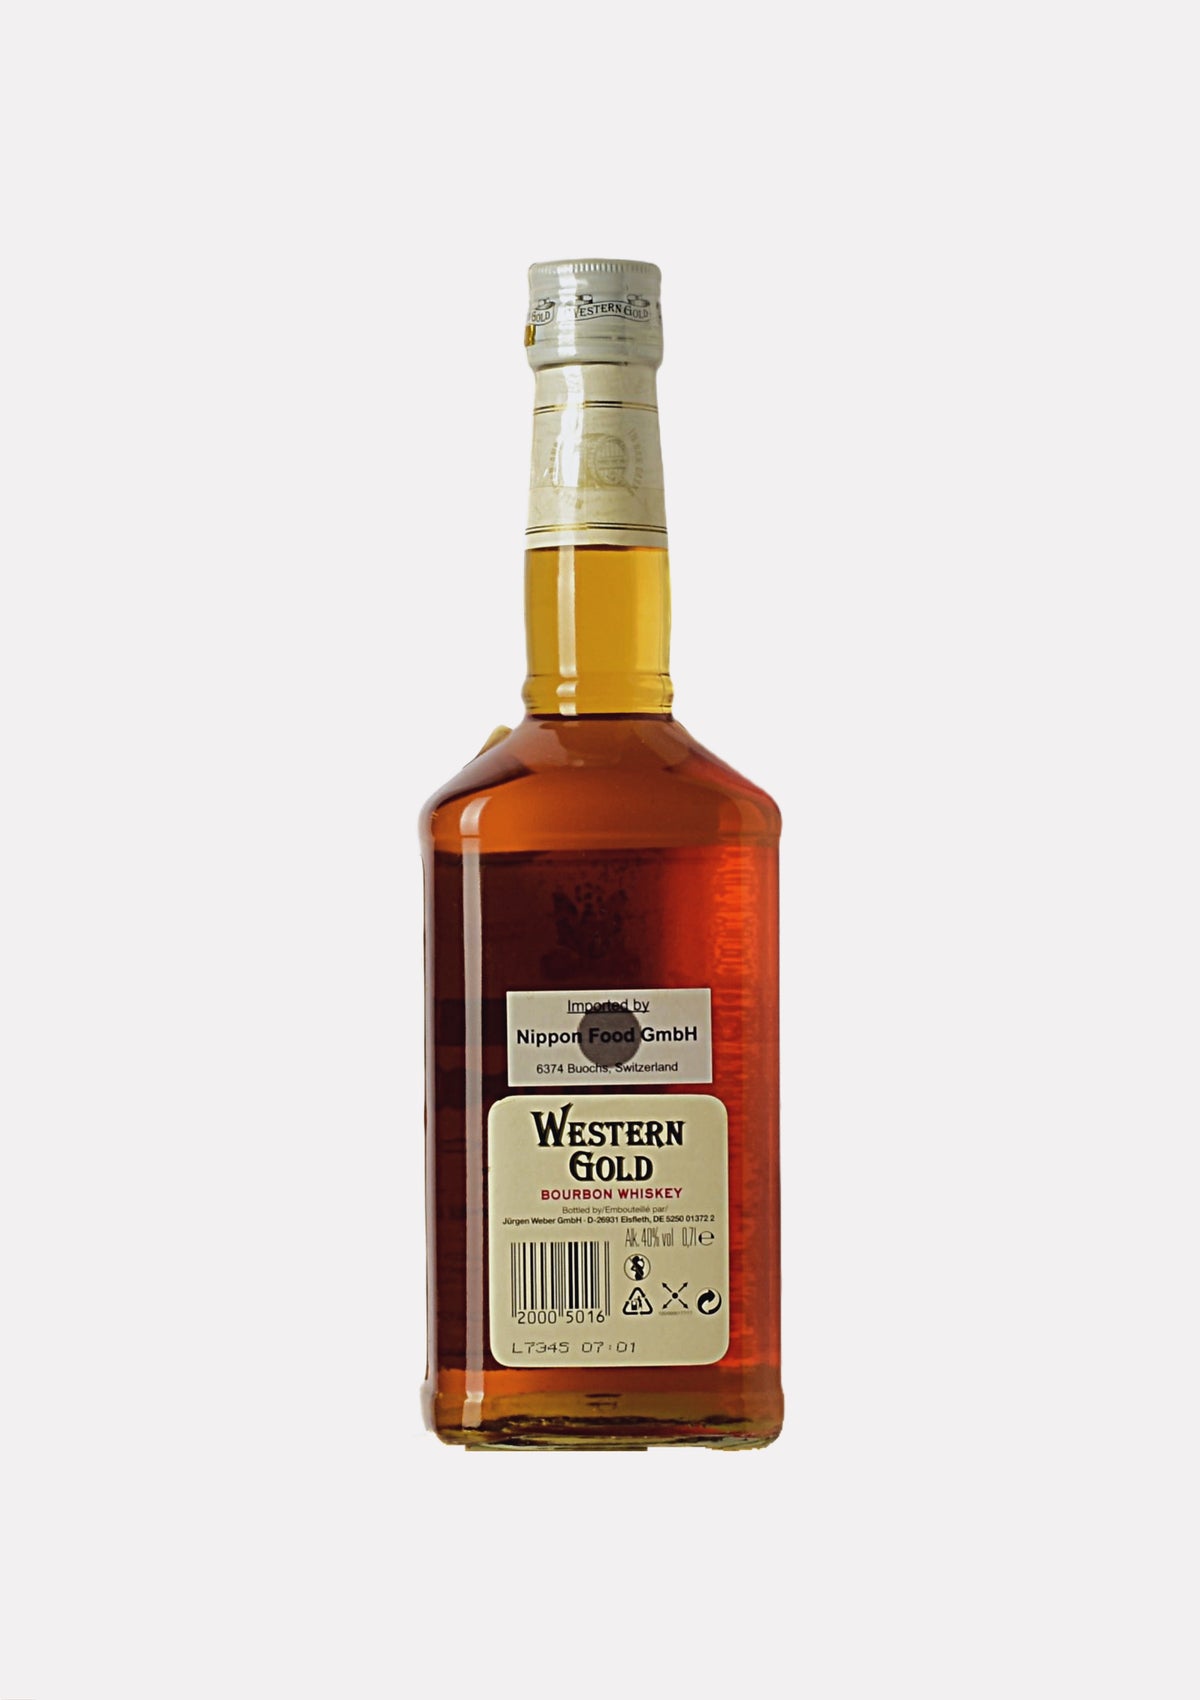 Western Gold Straight Old Kentucky Bourbon Whiskey